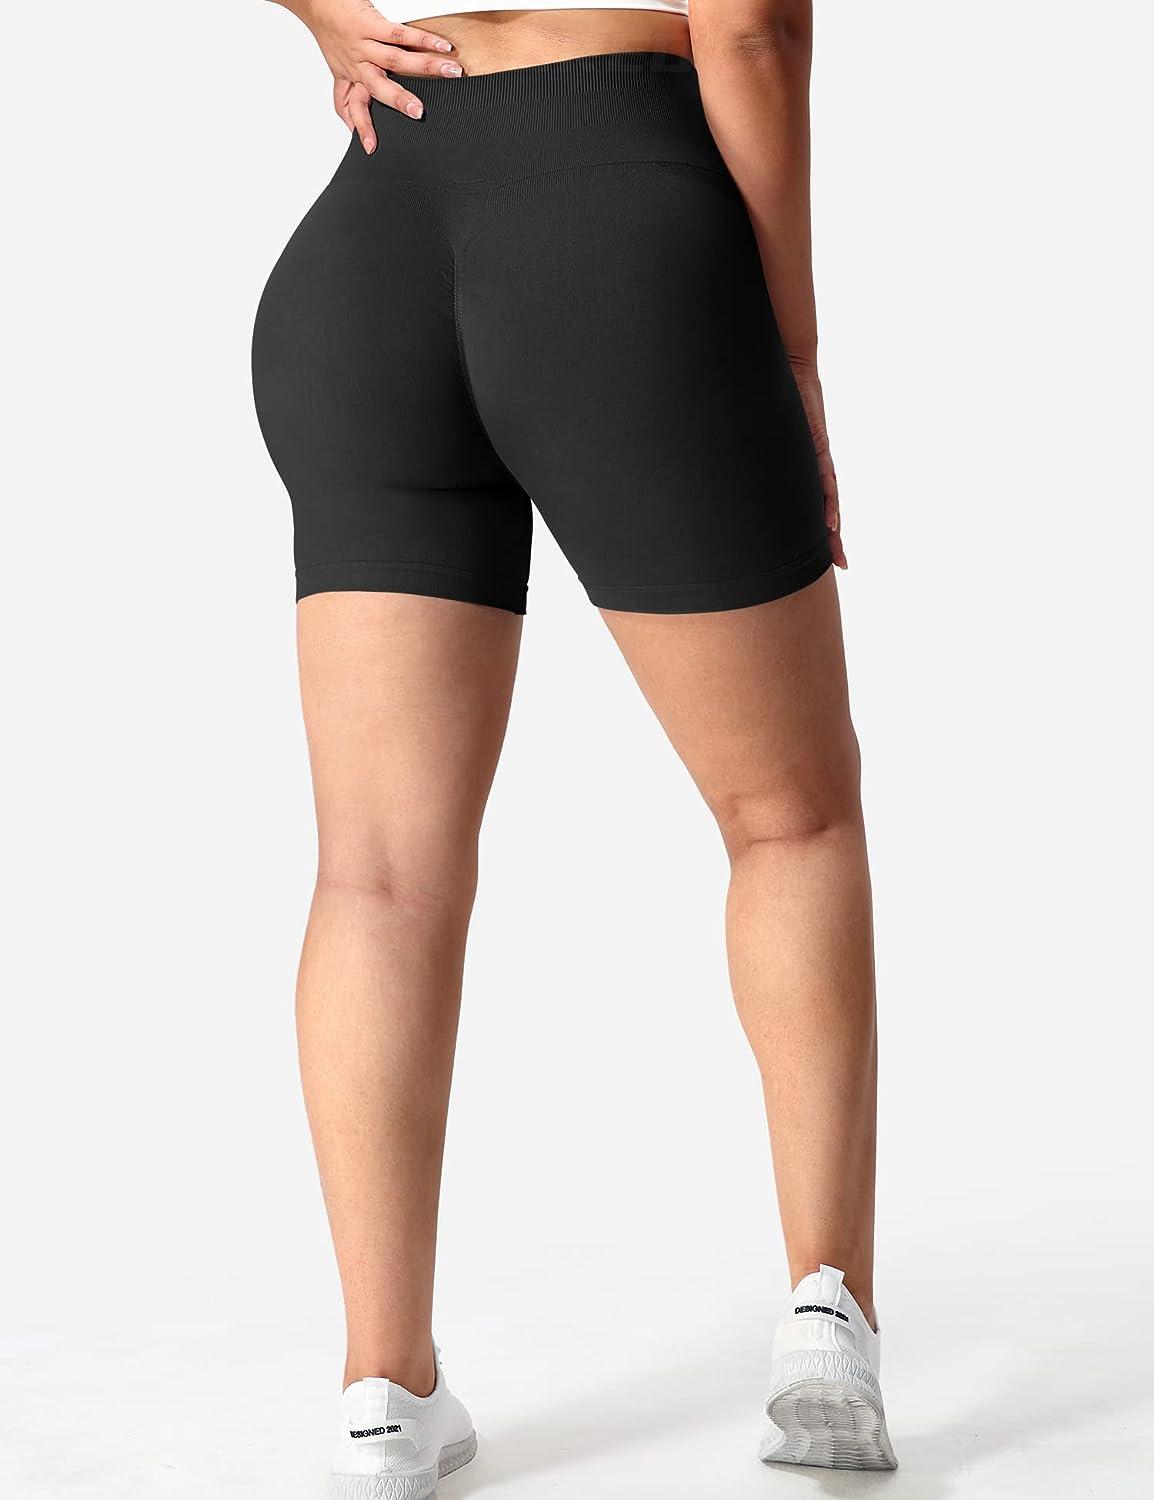 YEOREO Women Seamless Scrunch Butt Camo Workout Leggings High